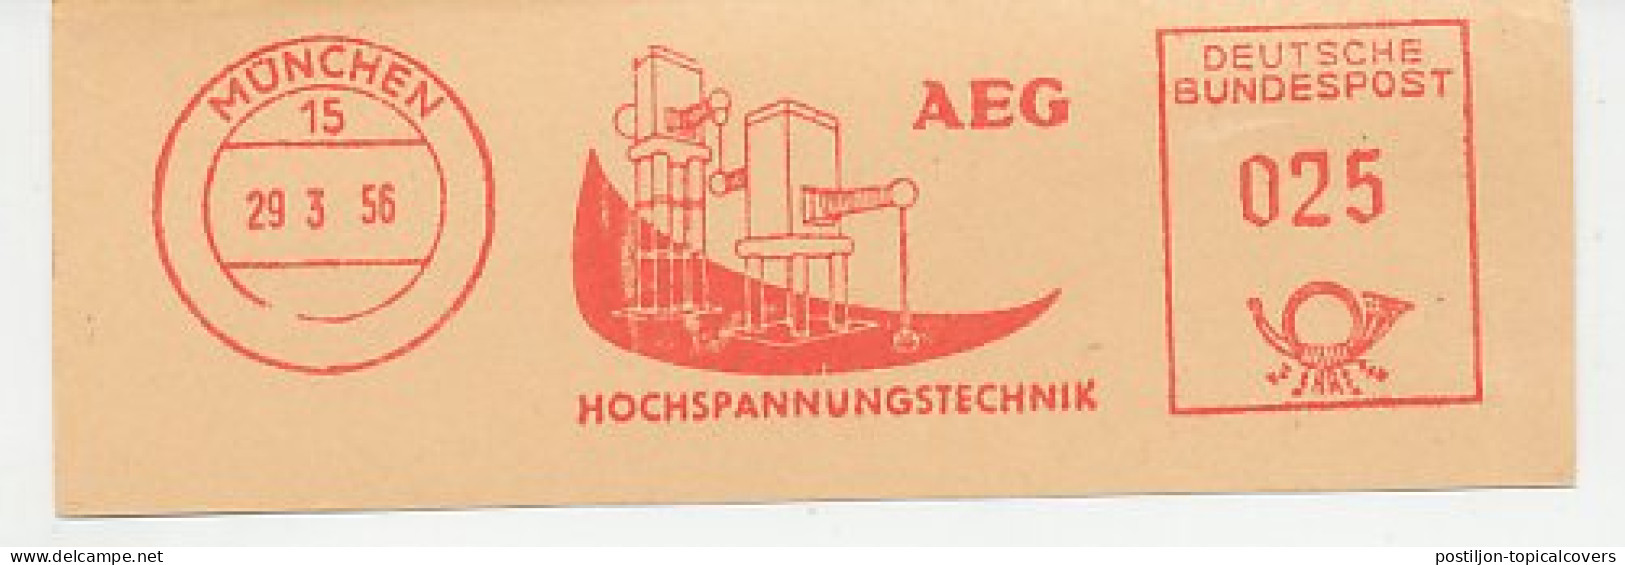 Meter Cut Germany 1956 High Voltage Engineering - AEG - Electricity